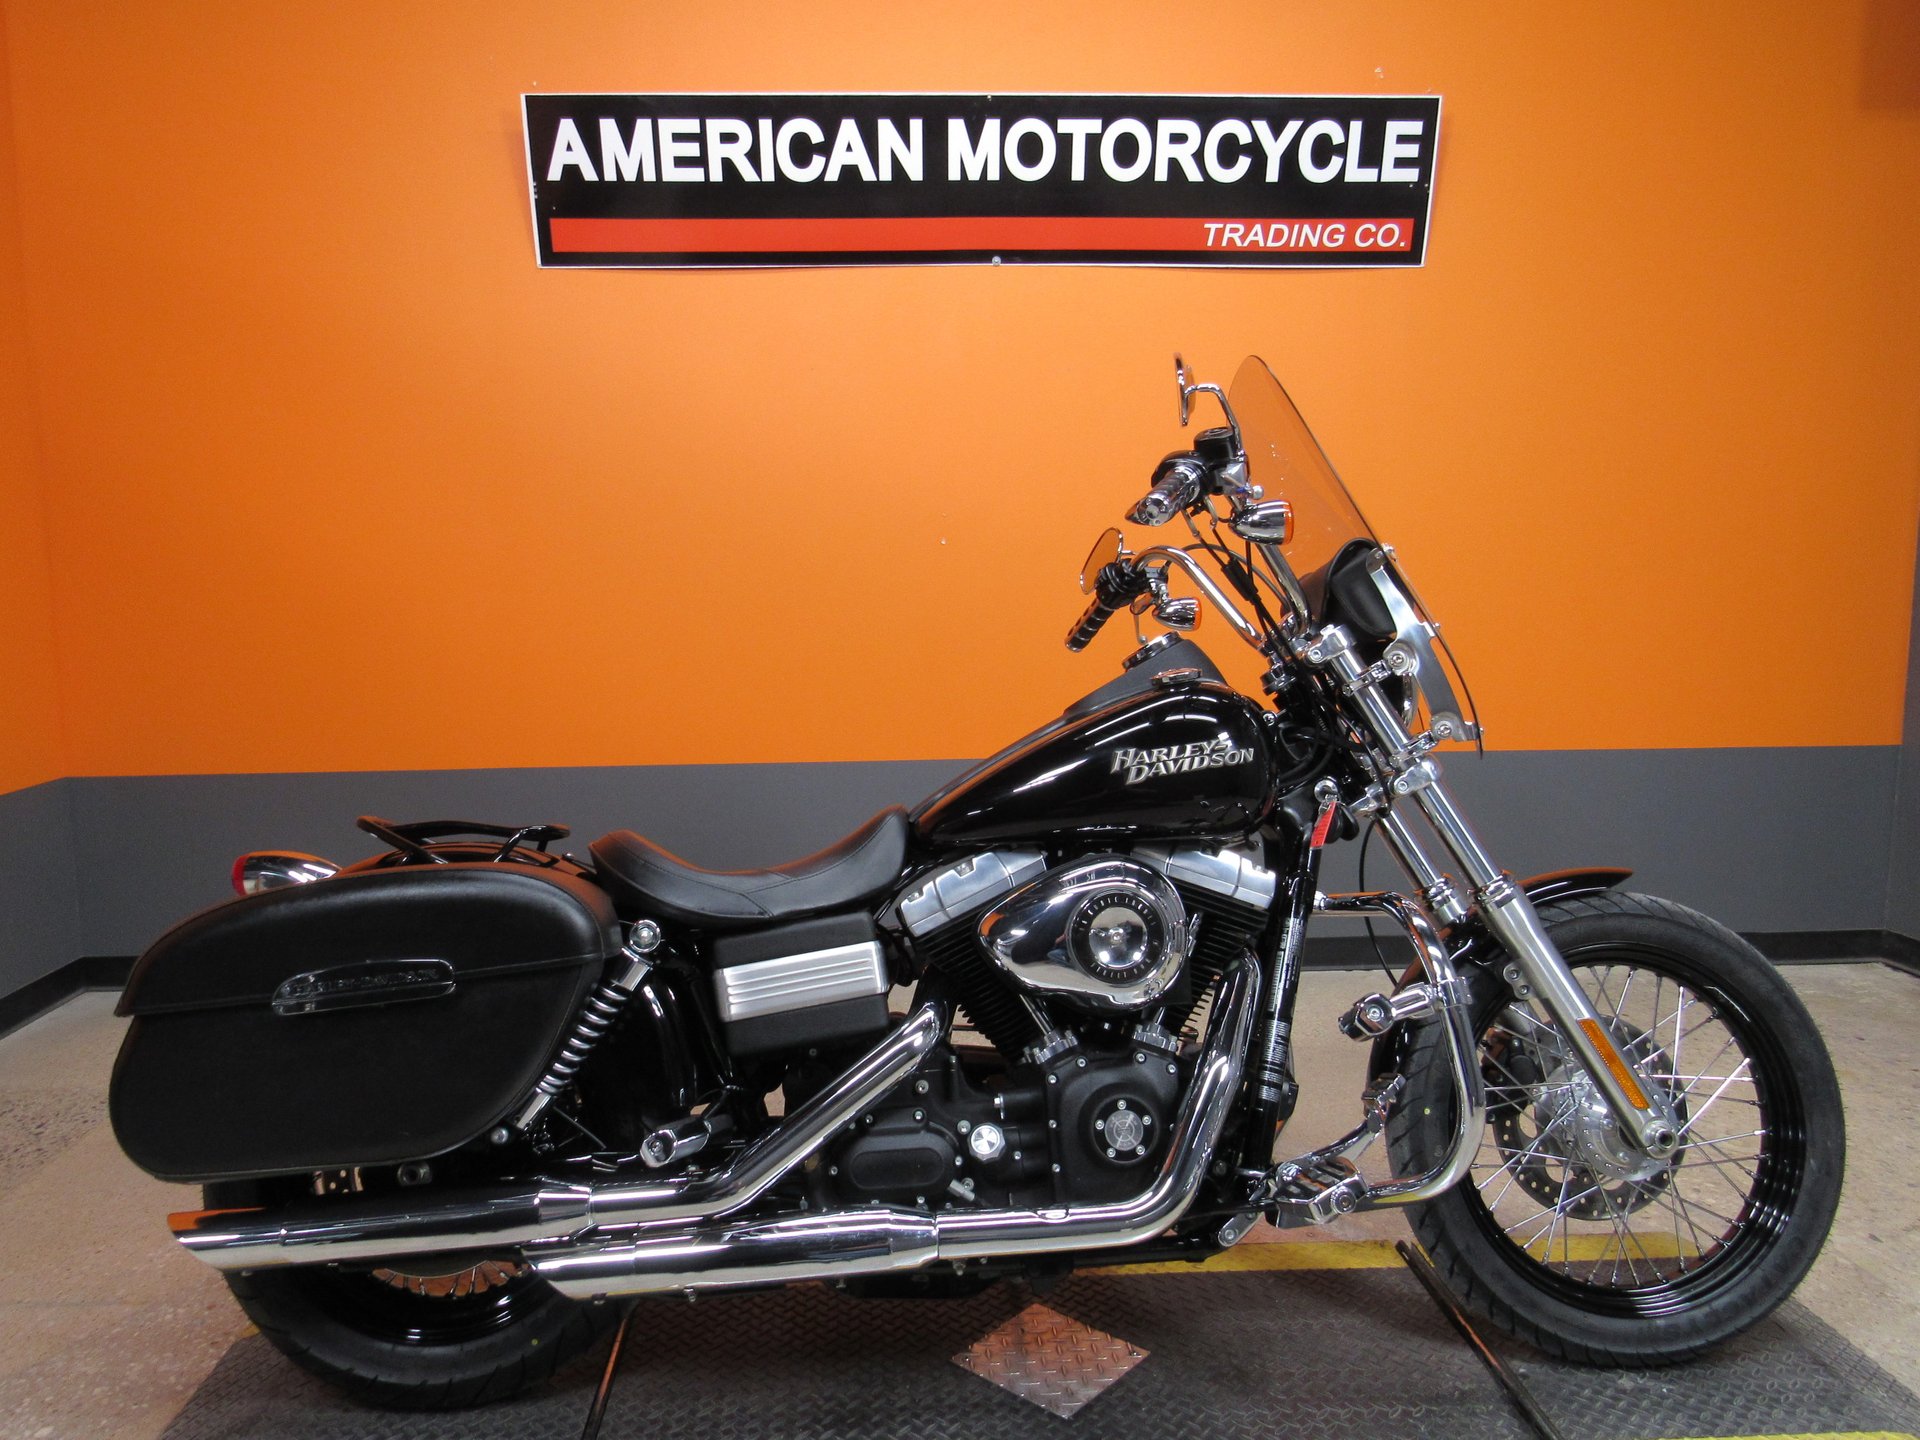 2011 Harley Davidson Dyna Street Bob American Motorcycle Trading Company Used Harley Davidson Motorcycles